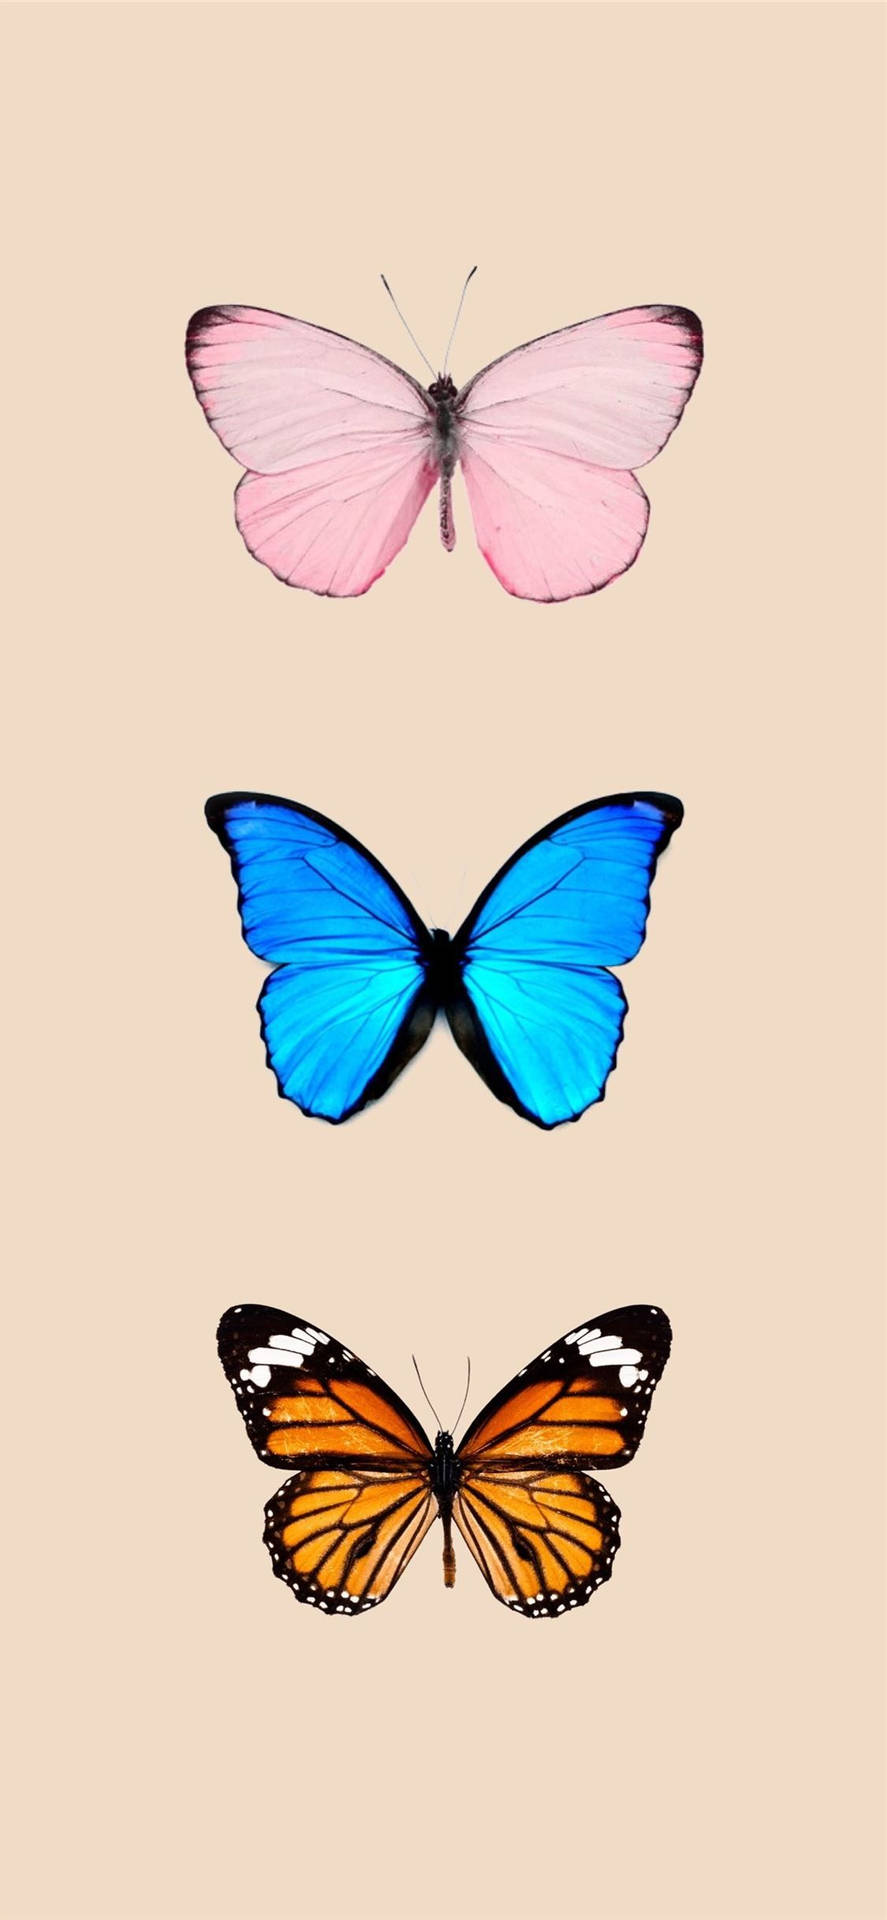 Three Butterflies Species Background